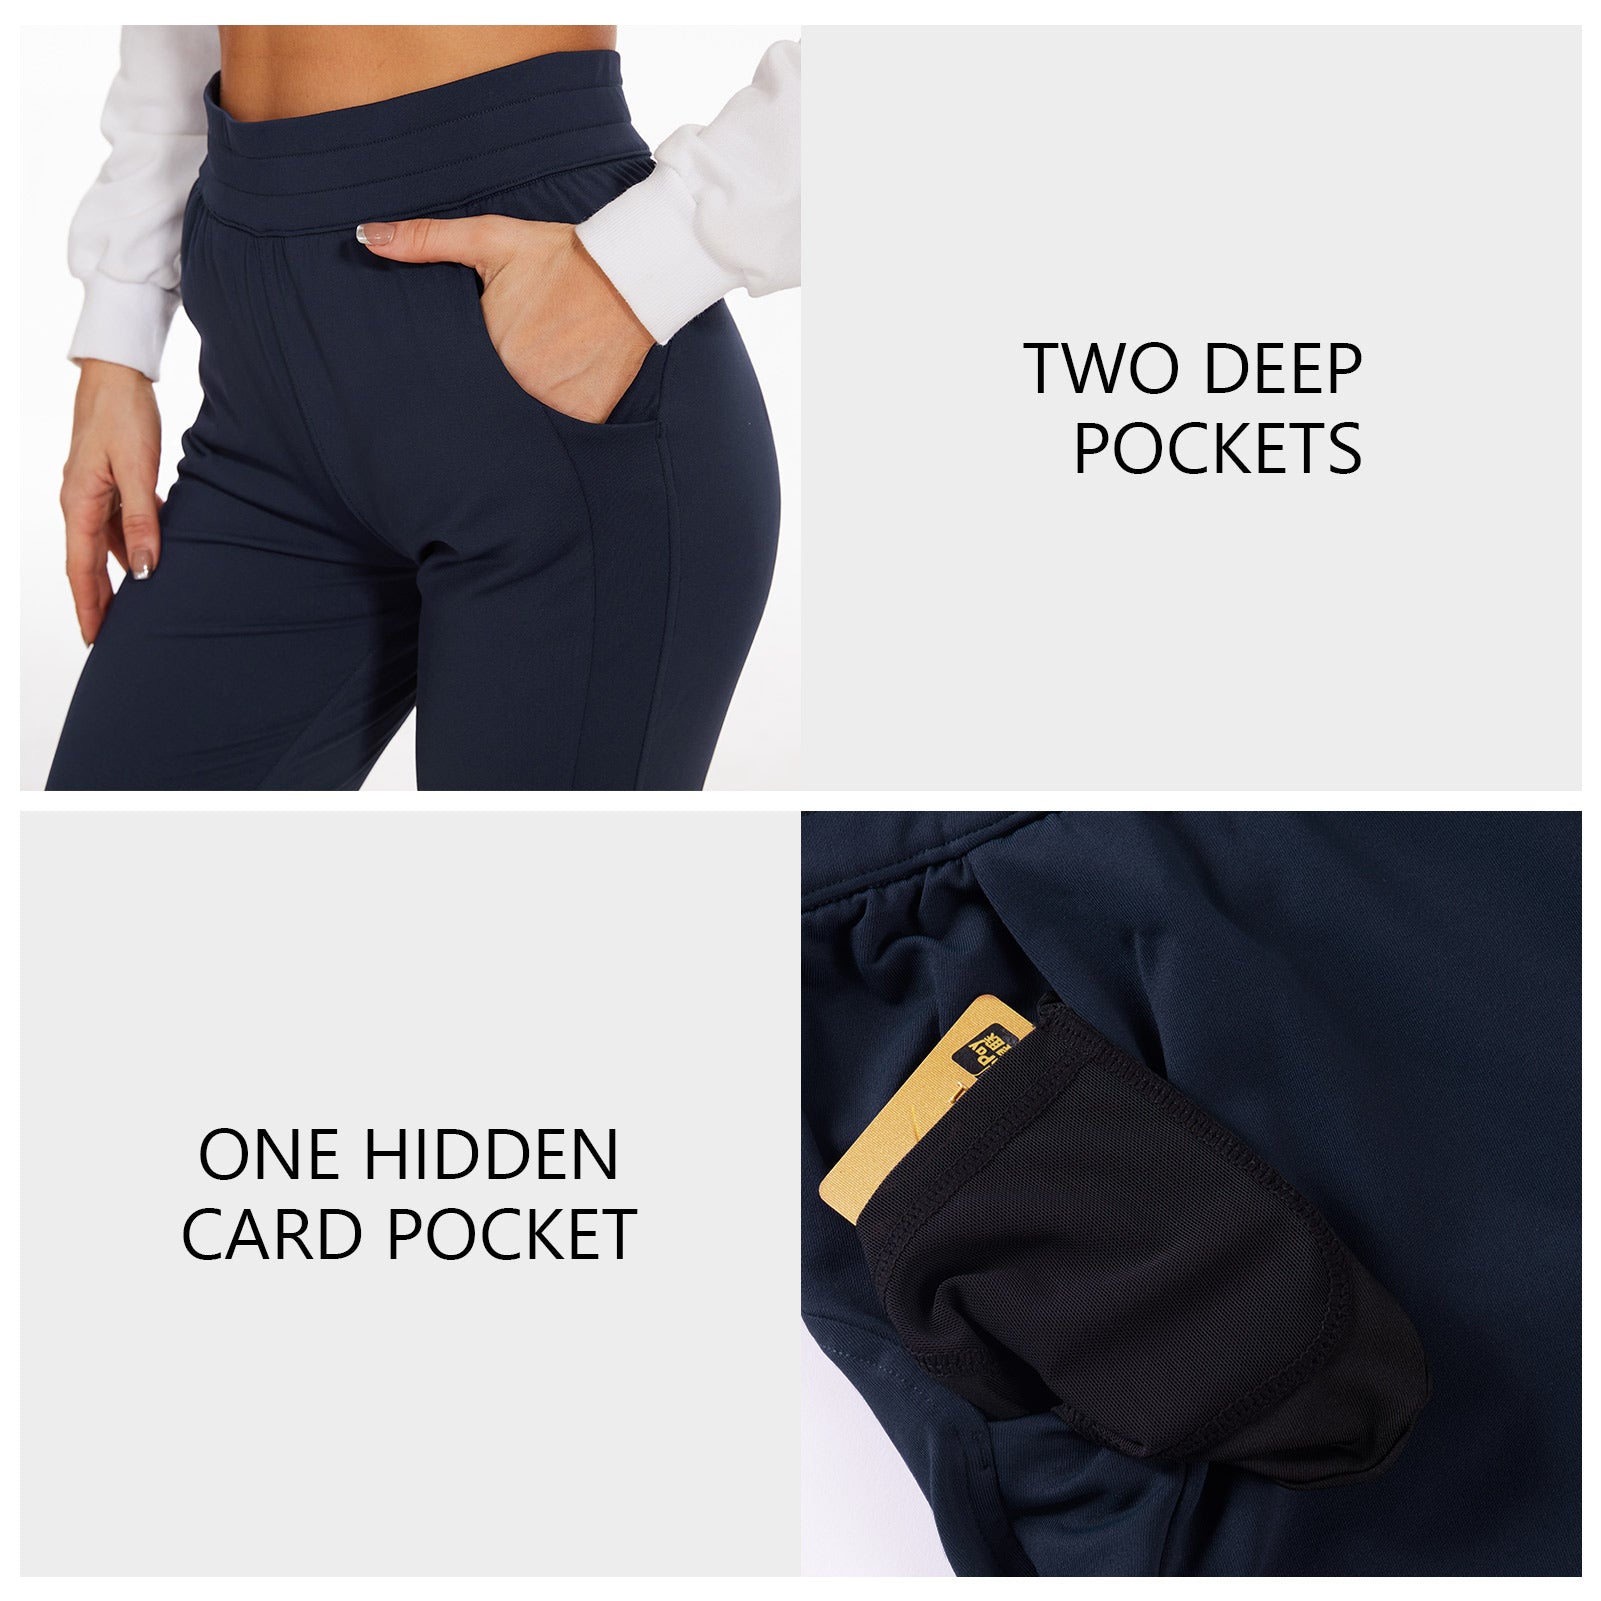 32 DEGREES Heat Women's Side Pocket Jogger Pants, Black, Small